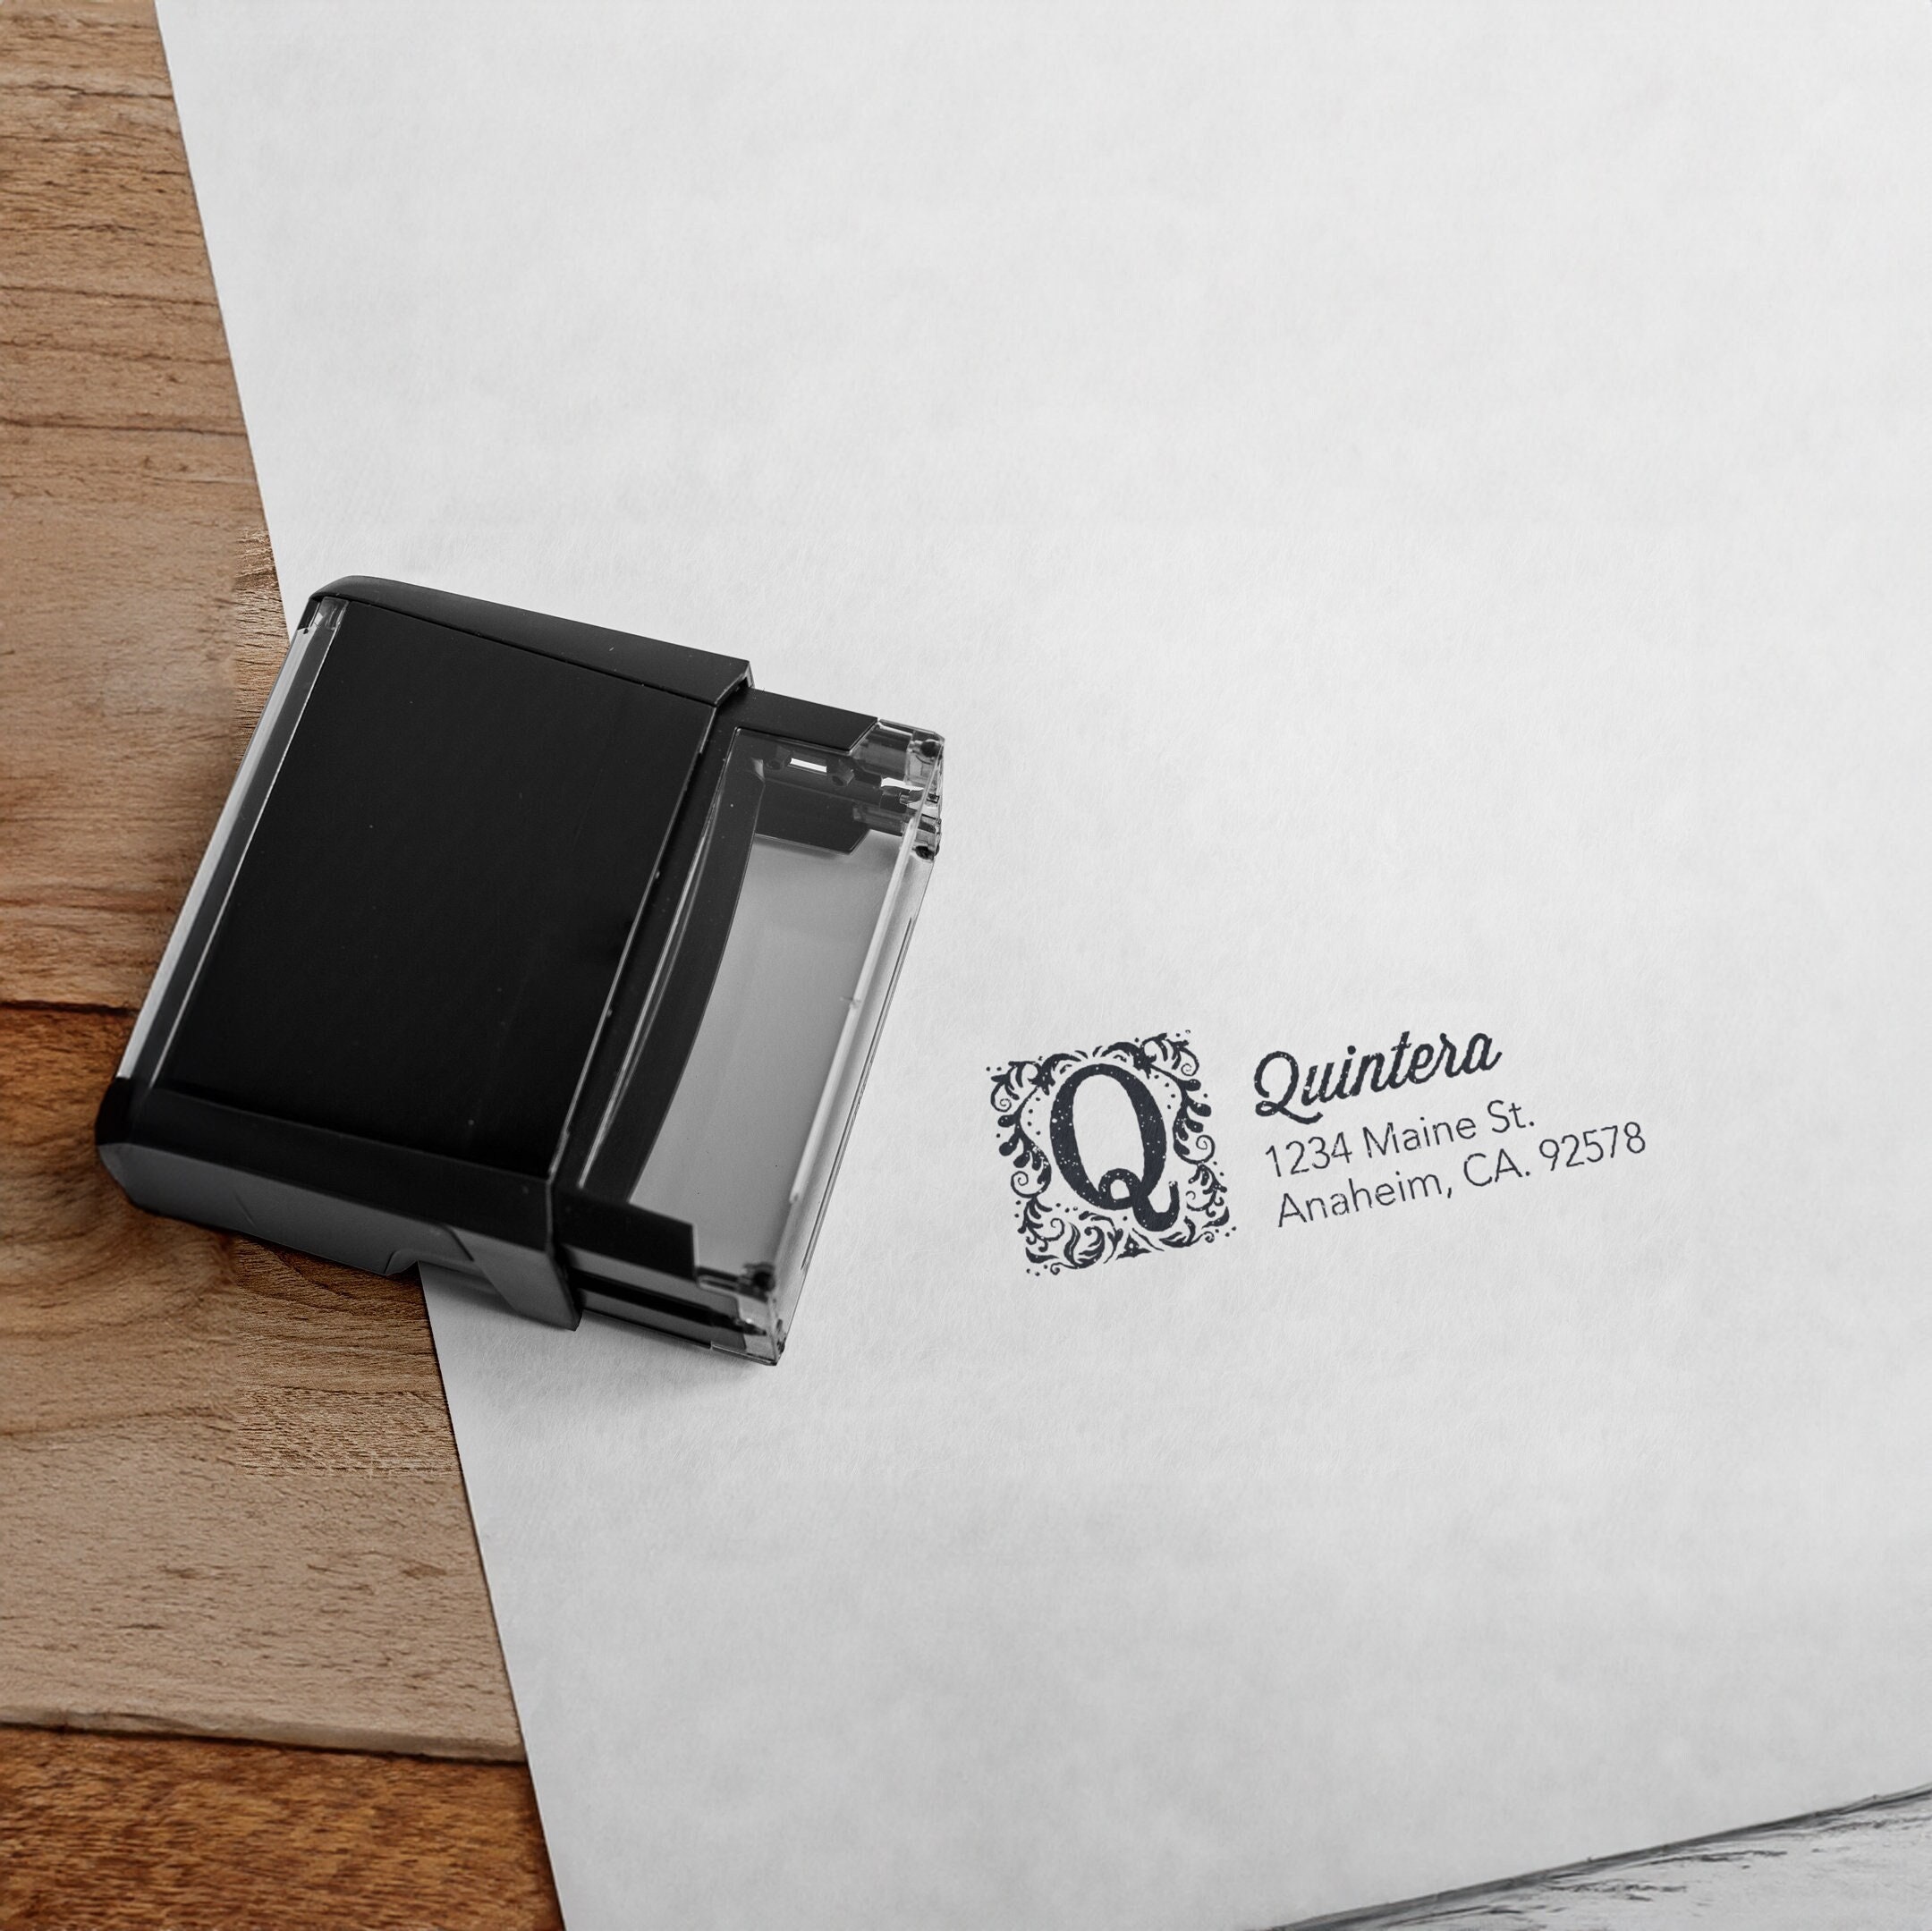 Embossing Essentials Basics: VersaMark Watermark Ink Stamp Pad